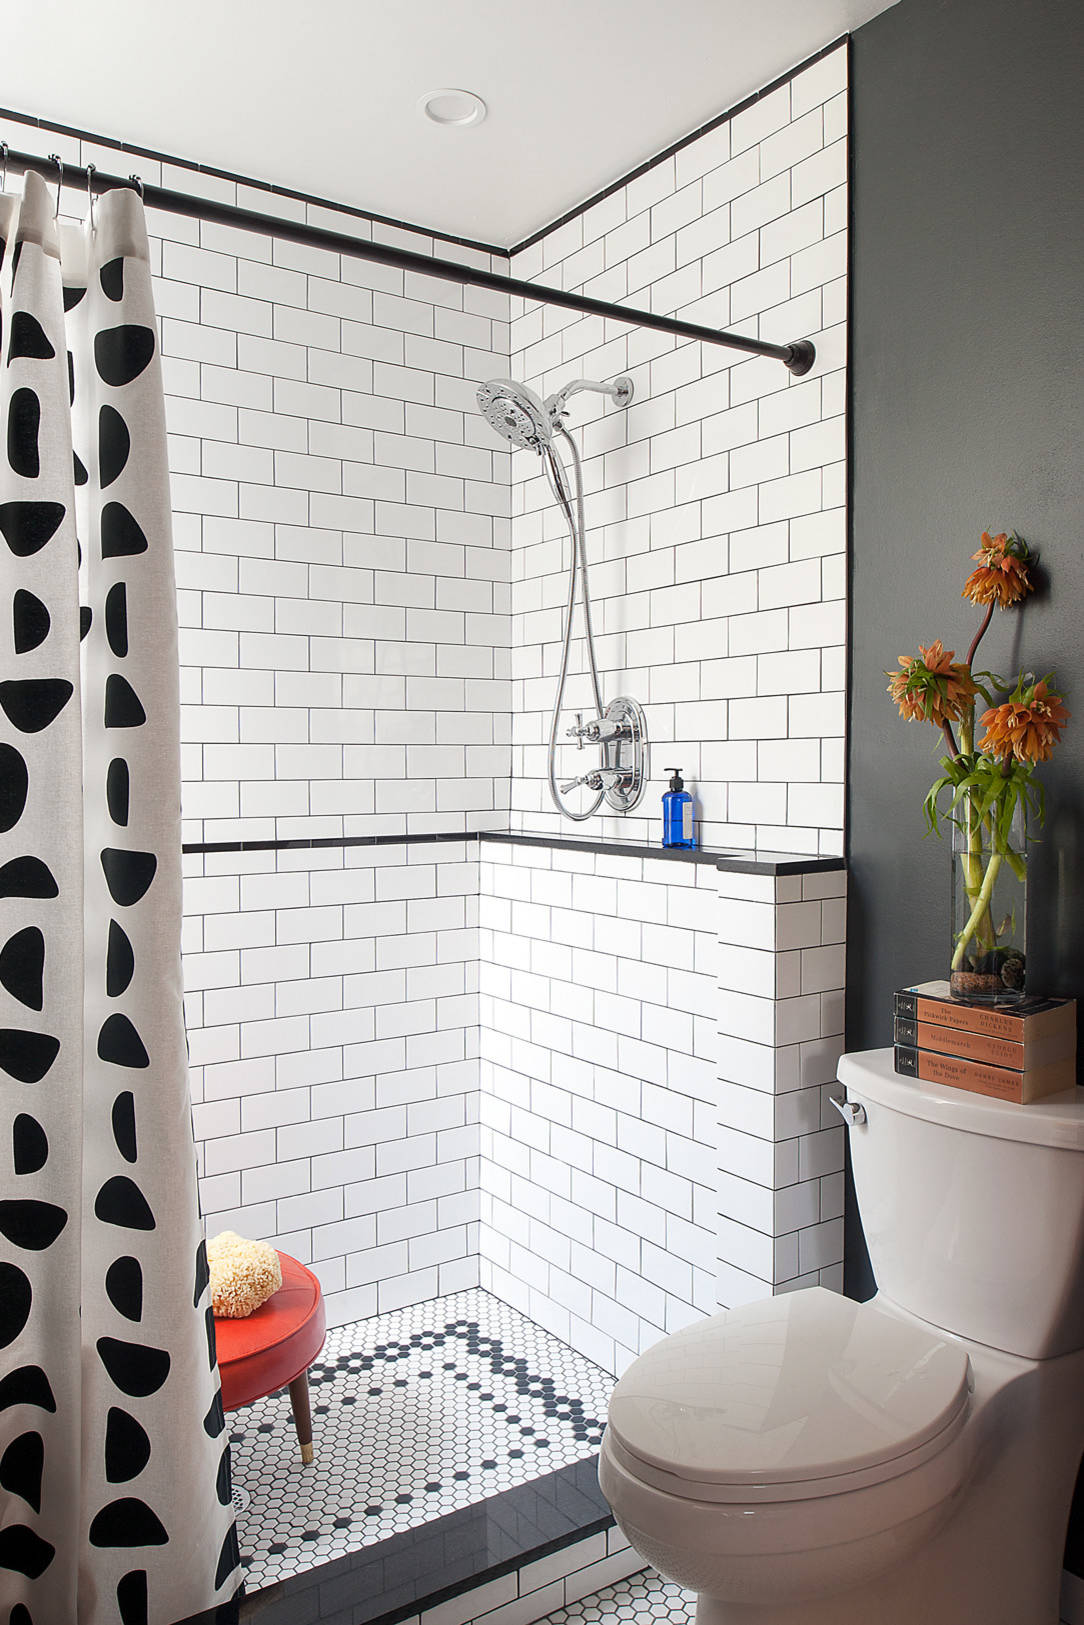 Mosaic Tile Floor Shower Curtain Ideas, Shower Curtain For Black And White Tile Bathroom